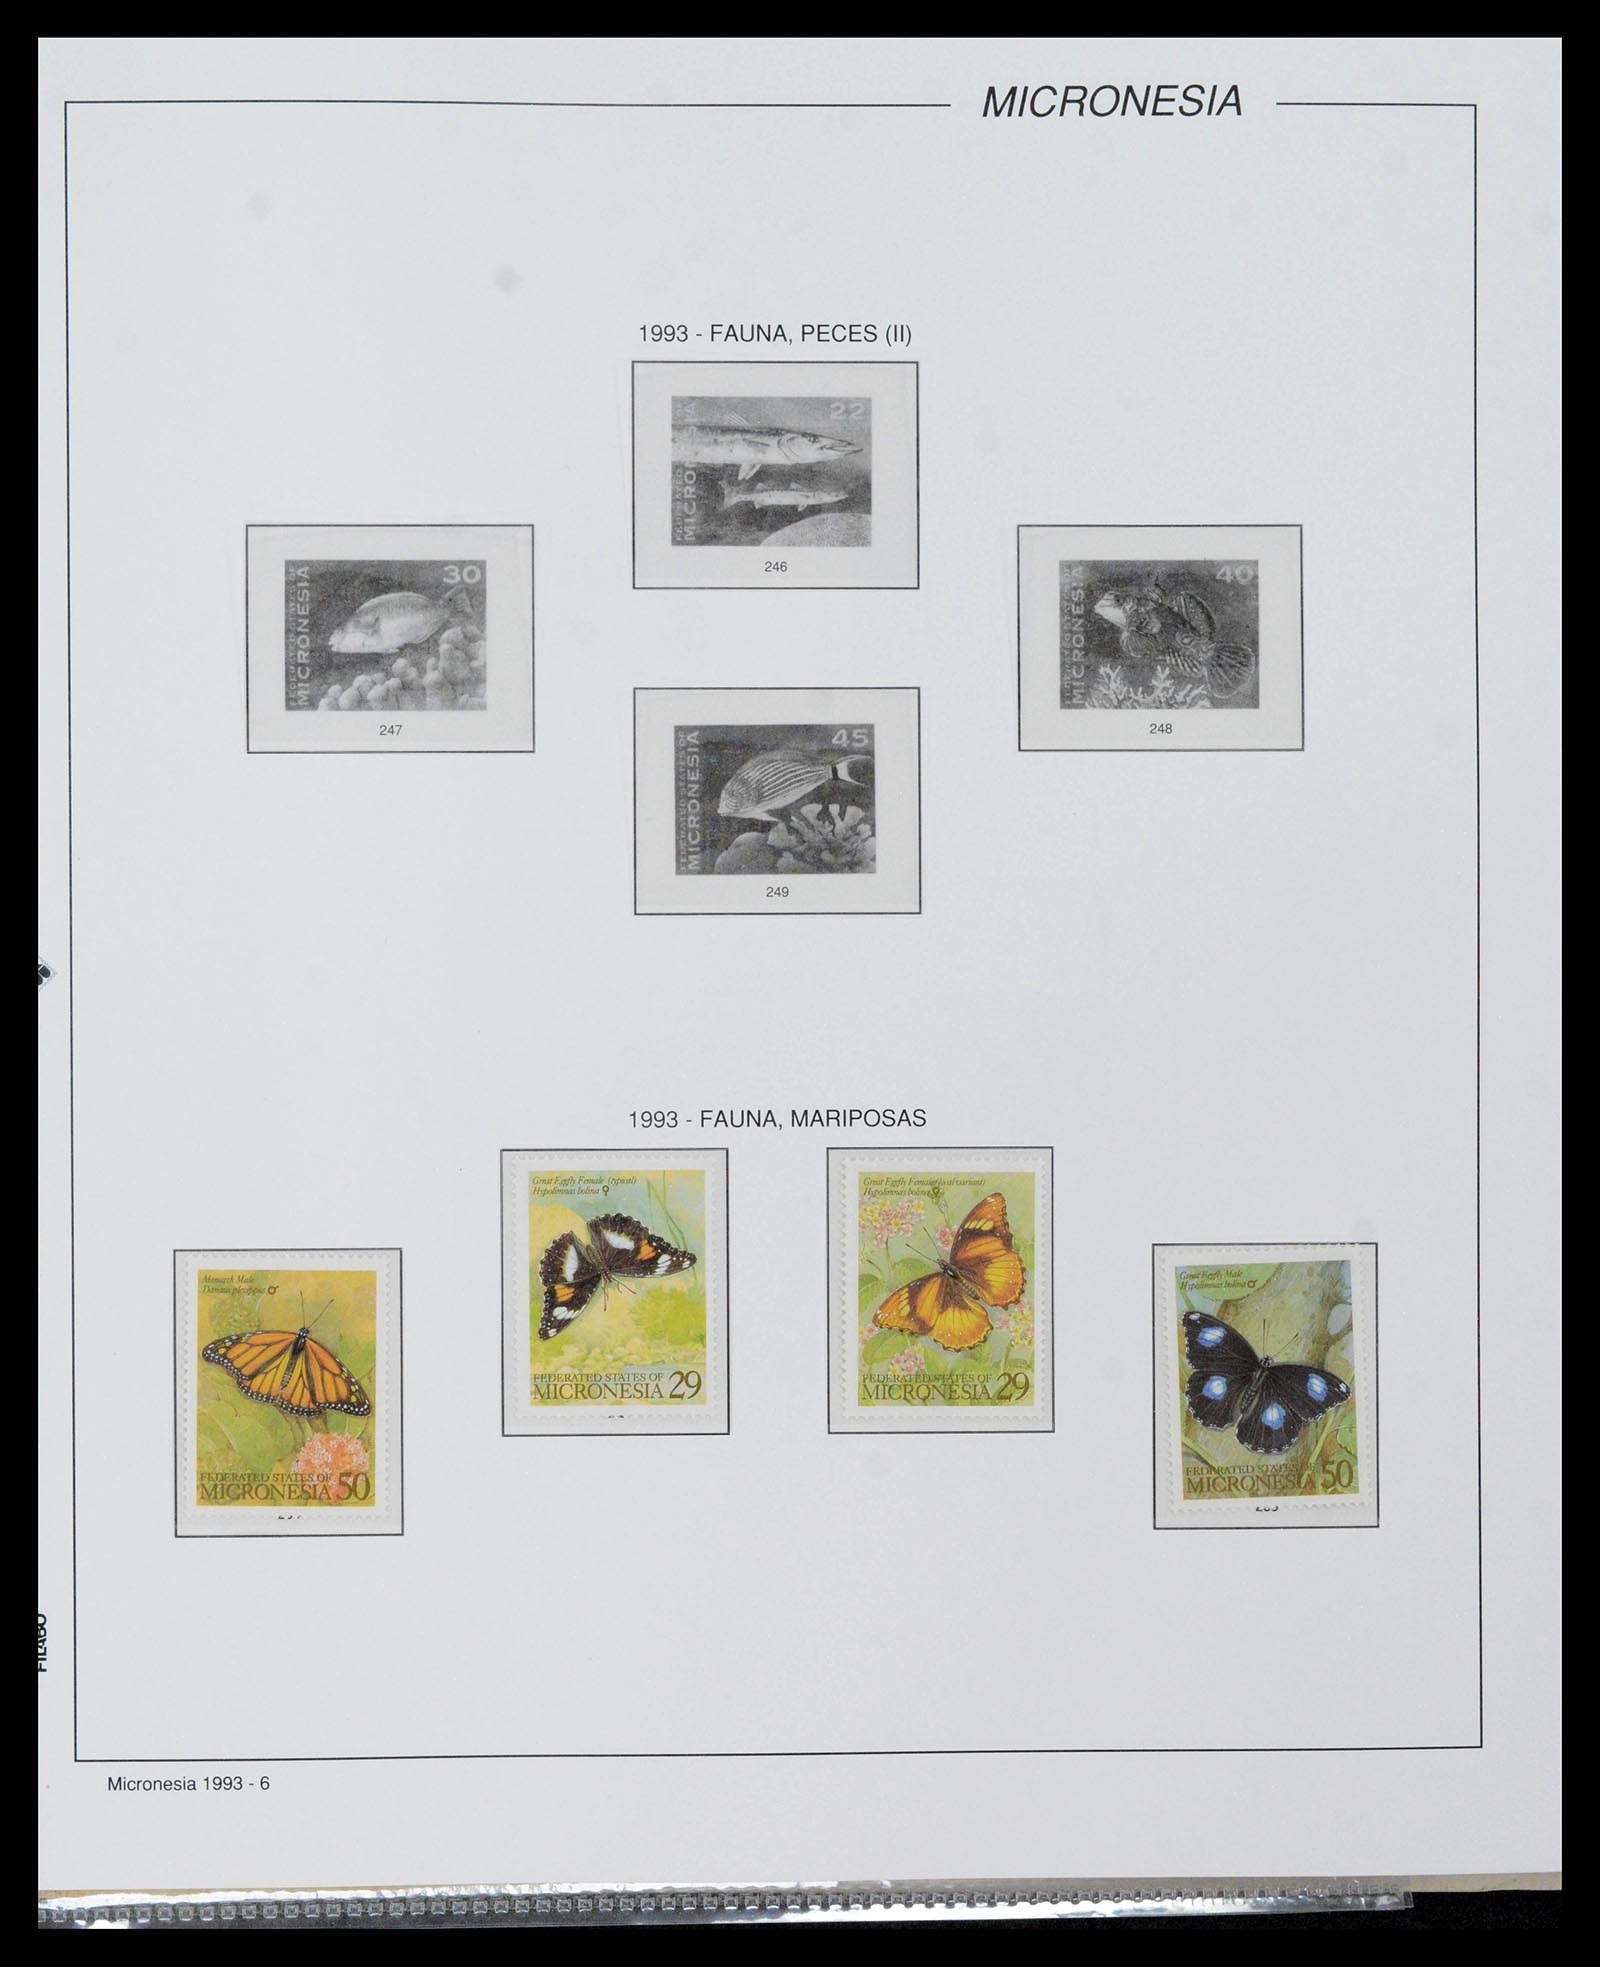 39222 0105 - Stamp collection 39222 Palau, Micronesia and Marshall islands 1980-1995.